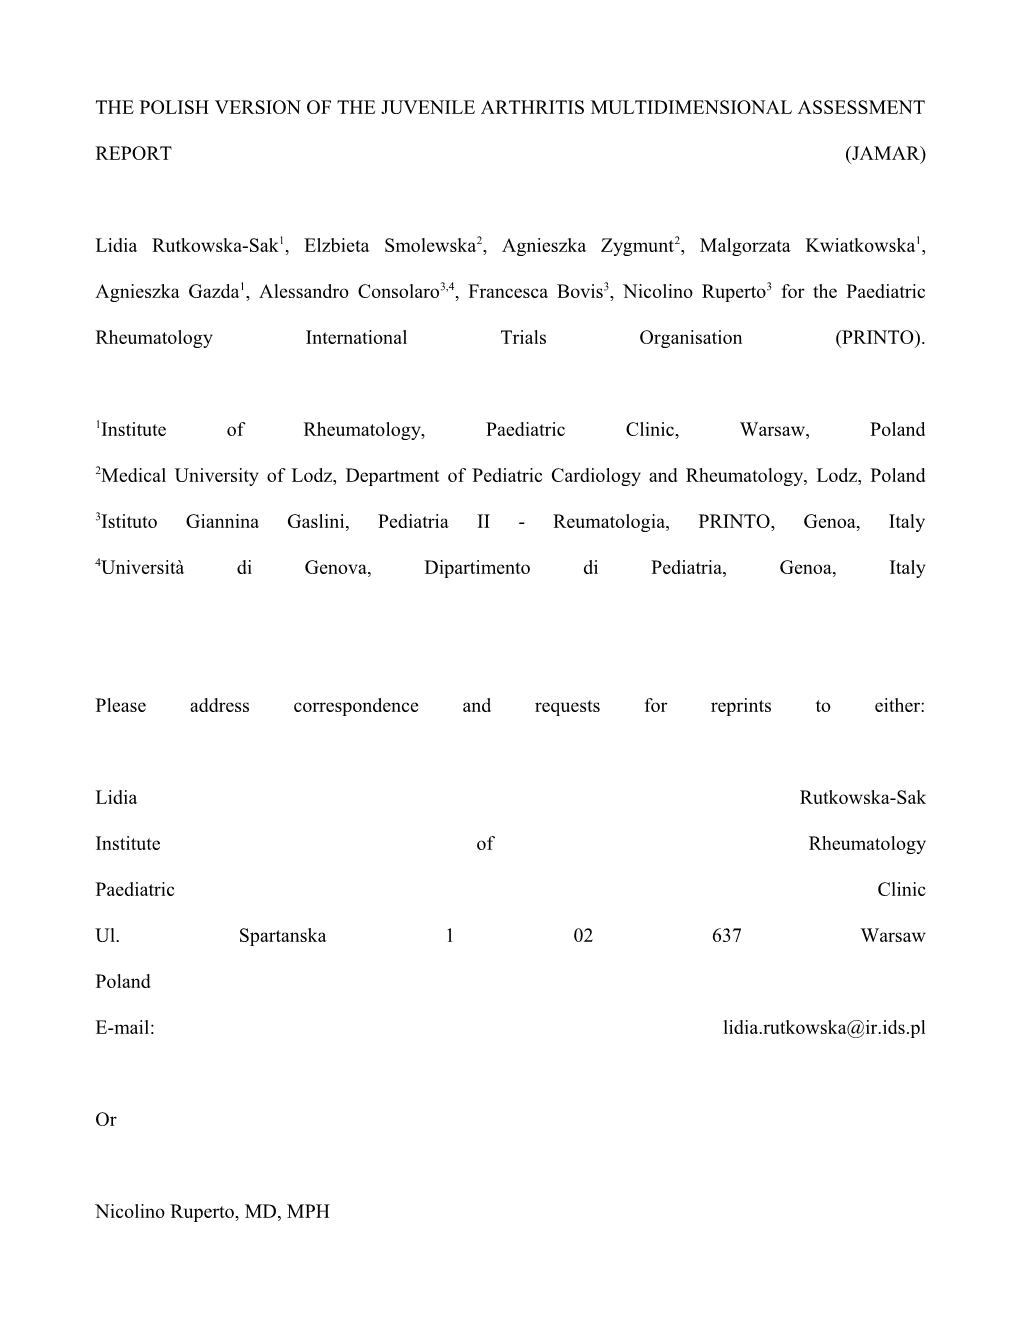 The Polish Version of the Juvenile Arthritis Multidimensional Assessment Report (Jamar)